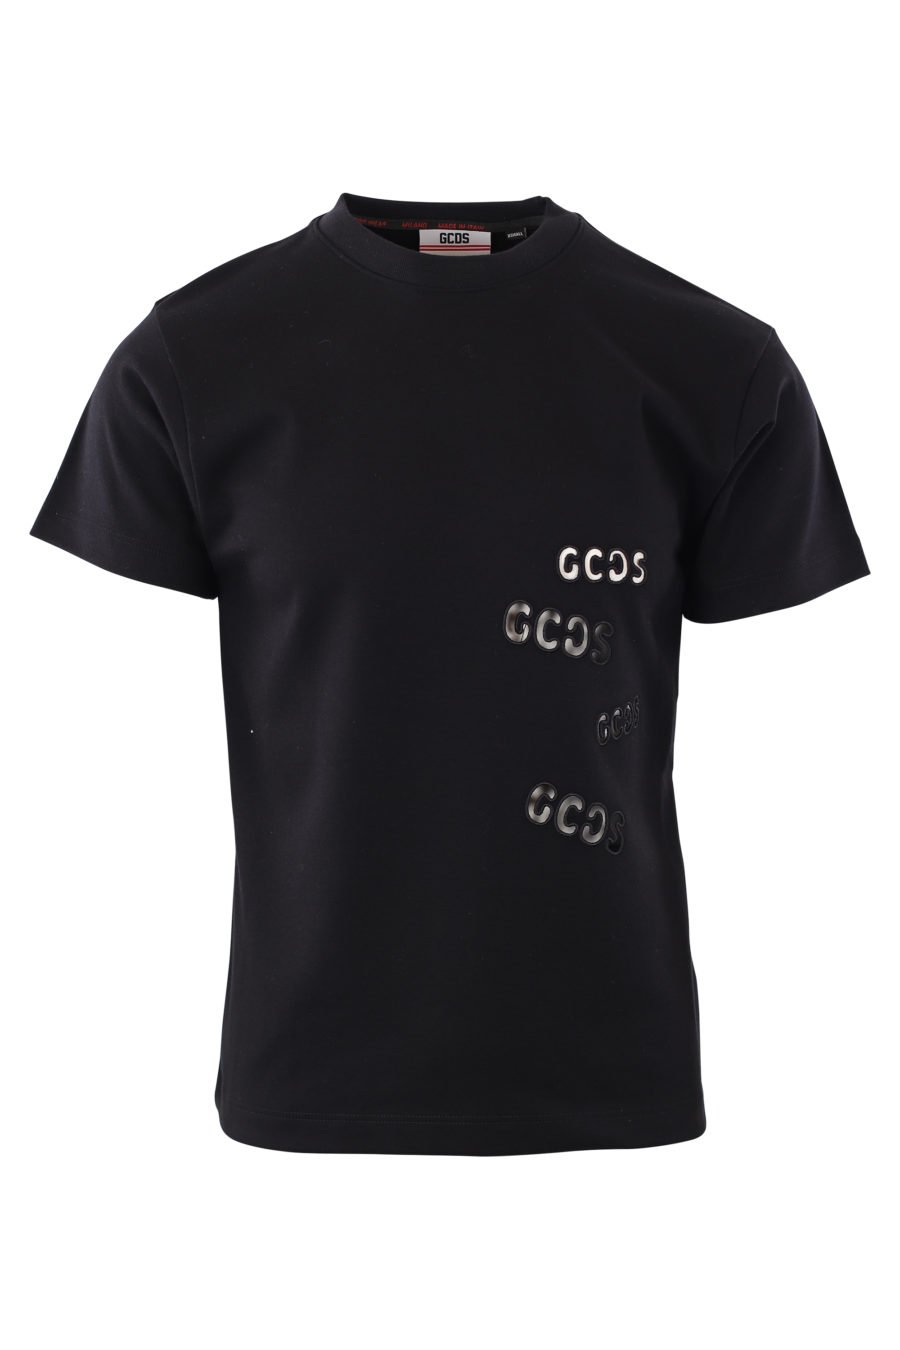 Camiseta negra con logo huecos - IMG 2045